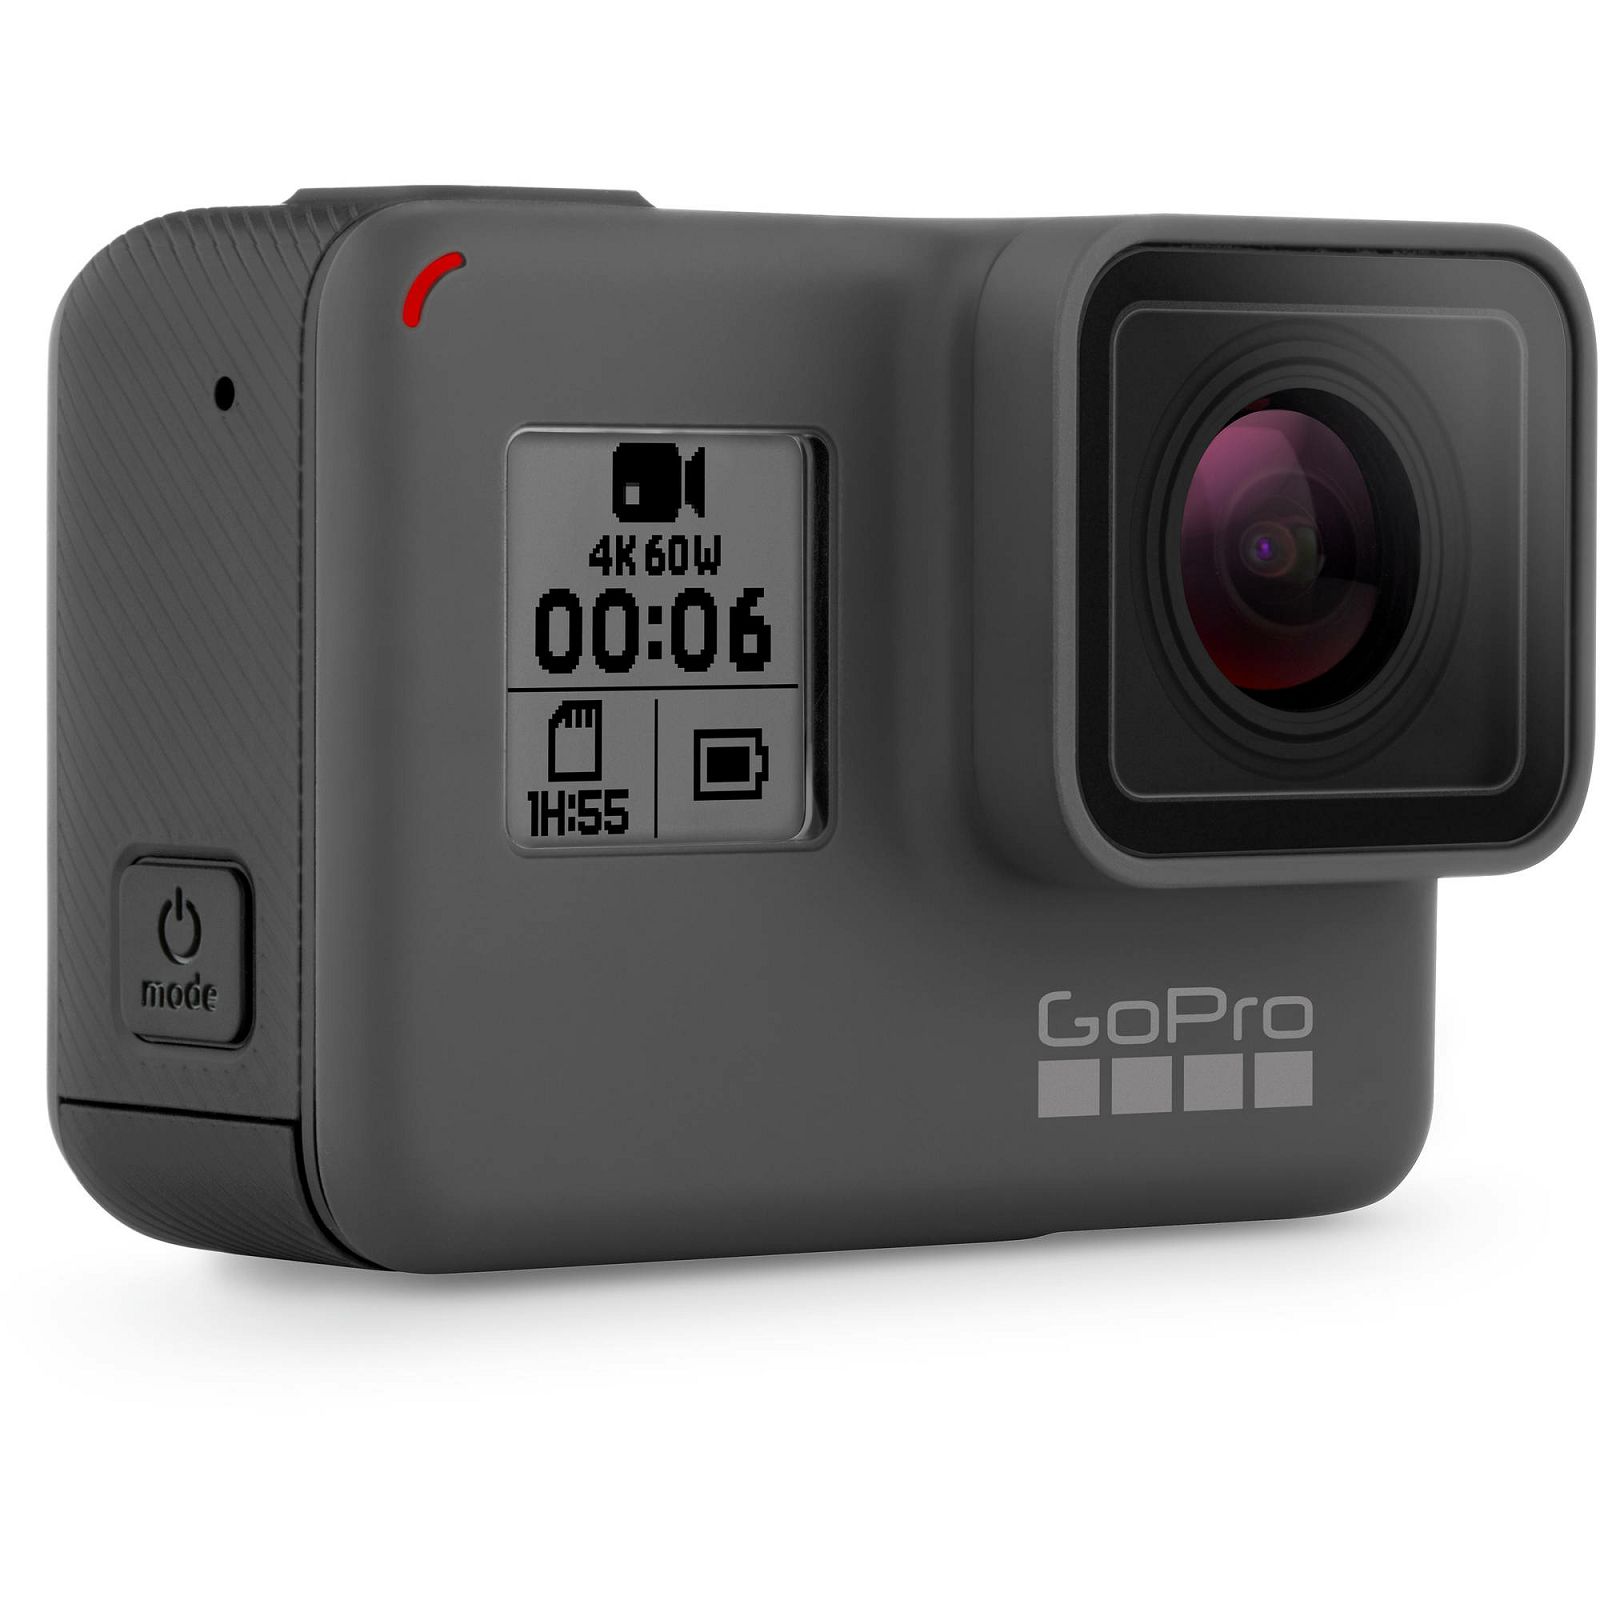 GoPro HERO6 Black Edition 4K60p 2.7K120p 12Mpx WiFi GPS Sportska akcijska digitalna kamera (CHDHX-601)